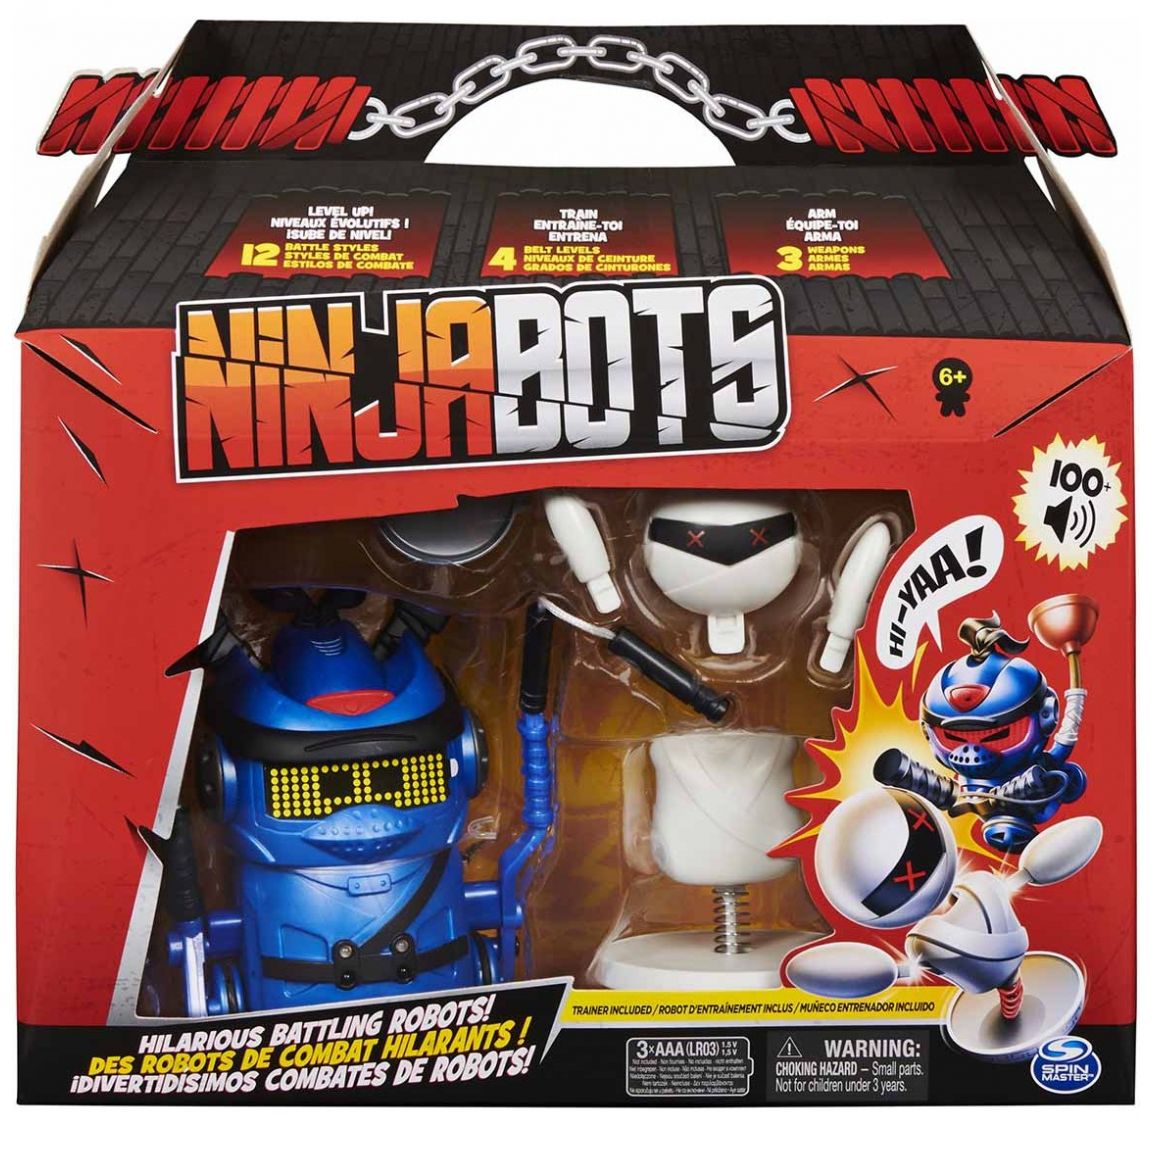 Ninja Bots - 1 Pack Spin Master